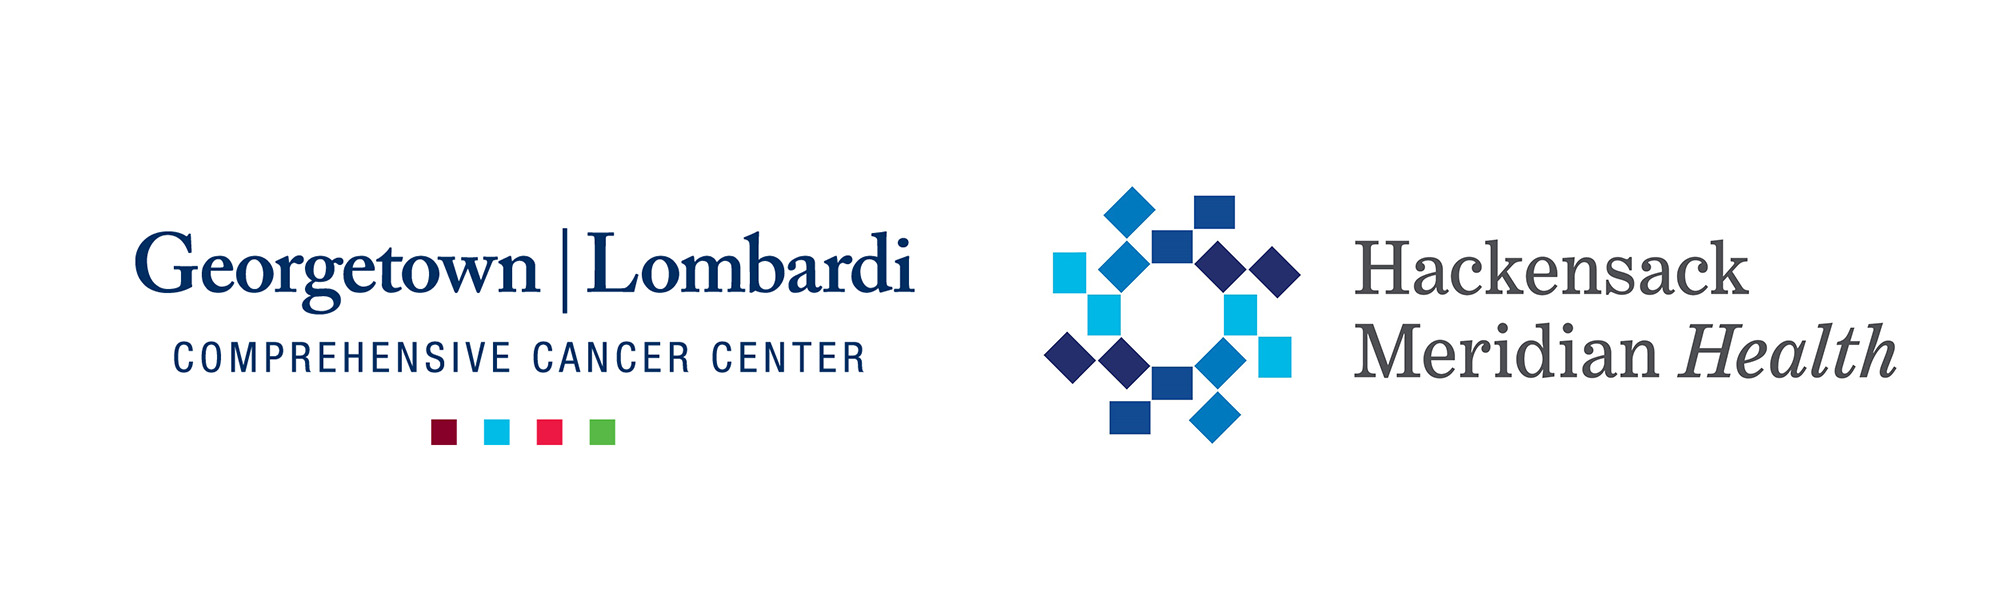 Georgetown Lombardi and Hackensack Meridian health logos